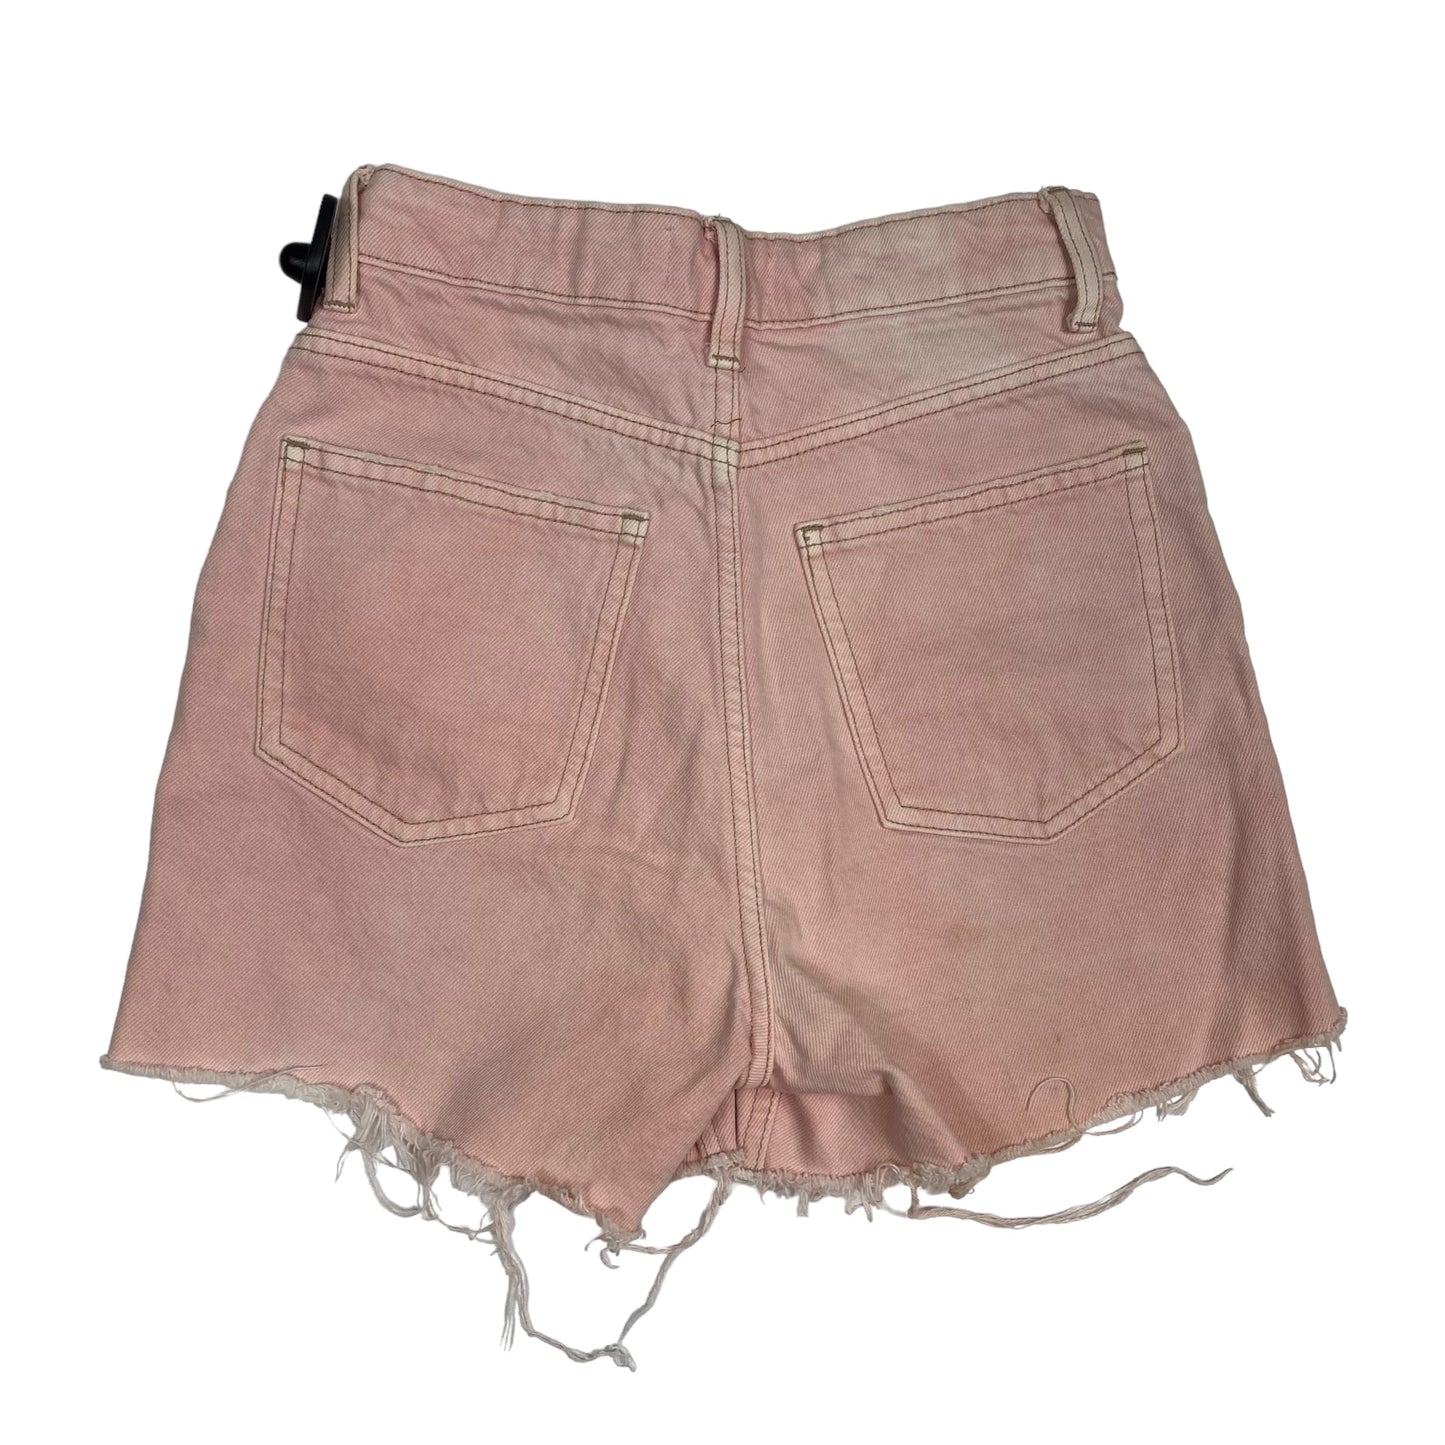 Shorts By Zara  Size: 2